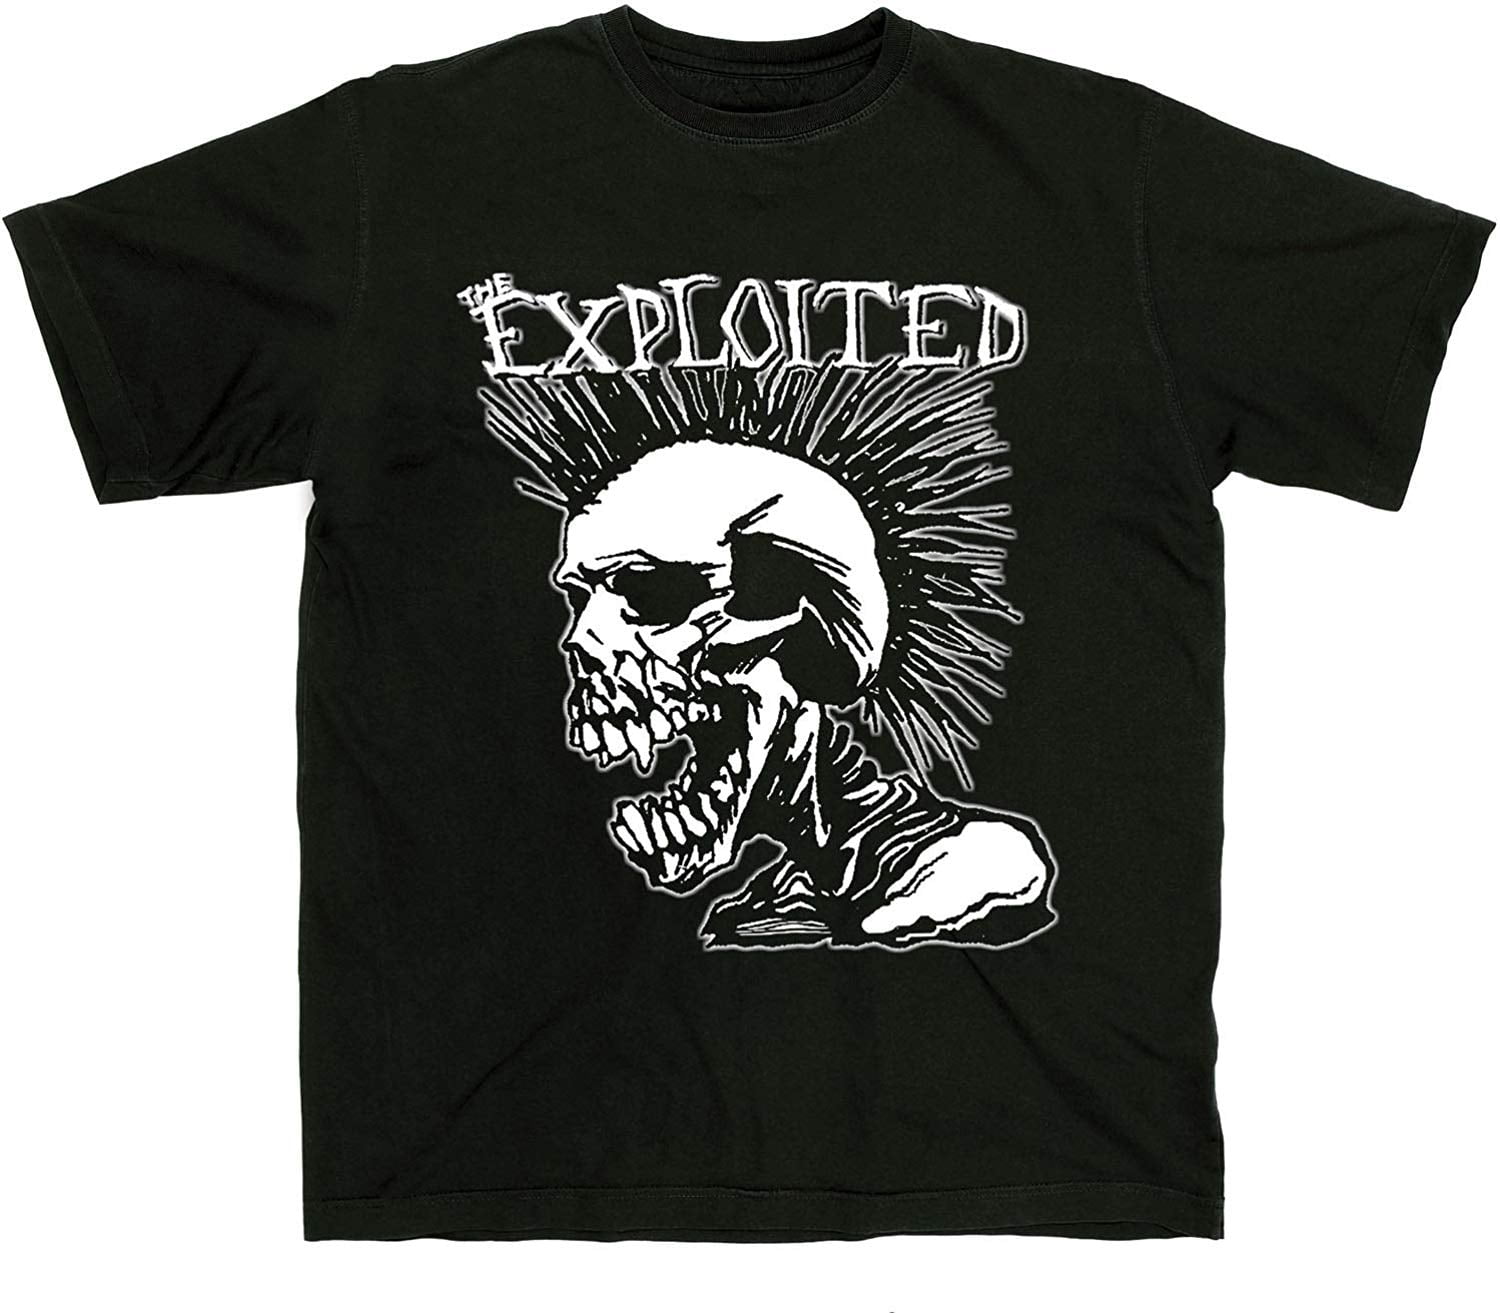 HIFI - The Exploited Men's Total Chaos T-Shirt Black - Walmart.com ...